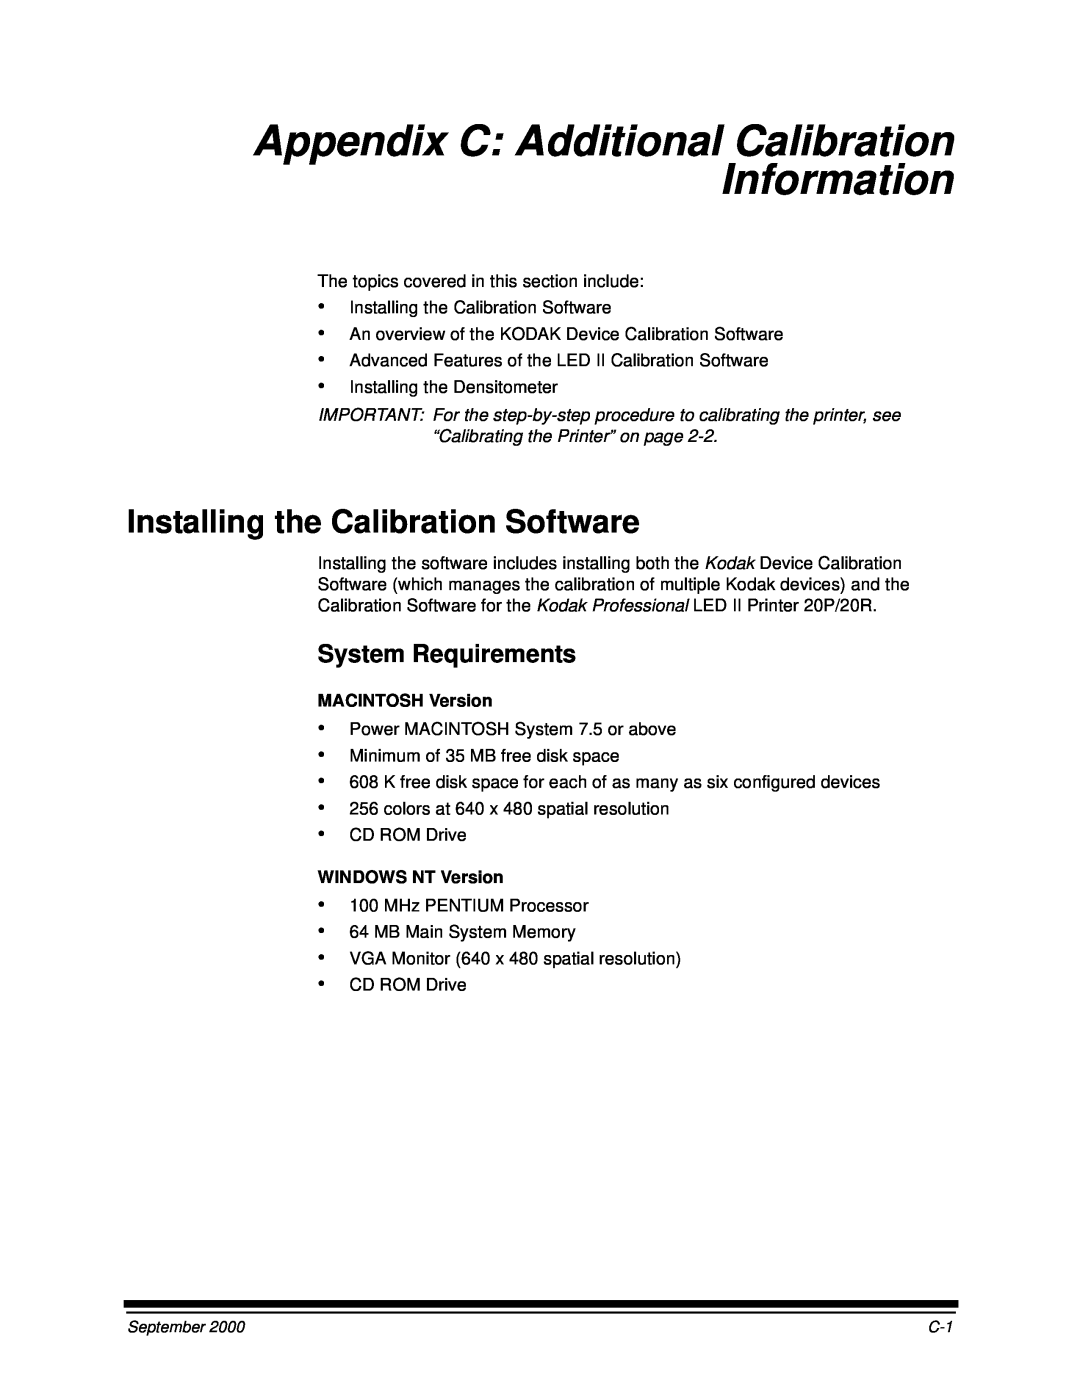 Kodak 20R manual Appendix C: Additional Calibration Information, Installing the Calibration Software, System Requirements 